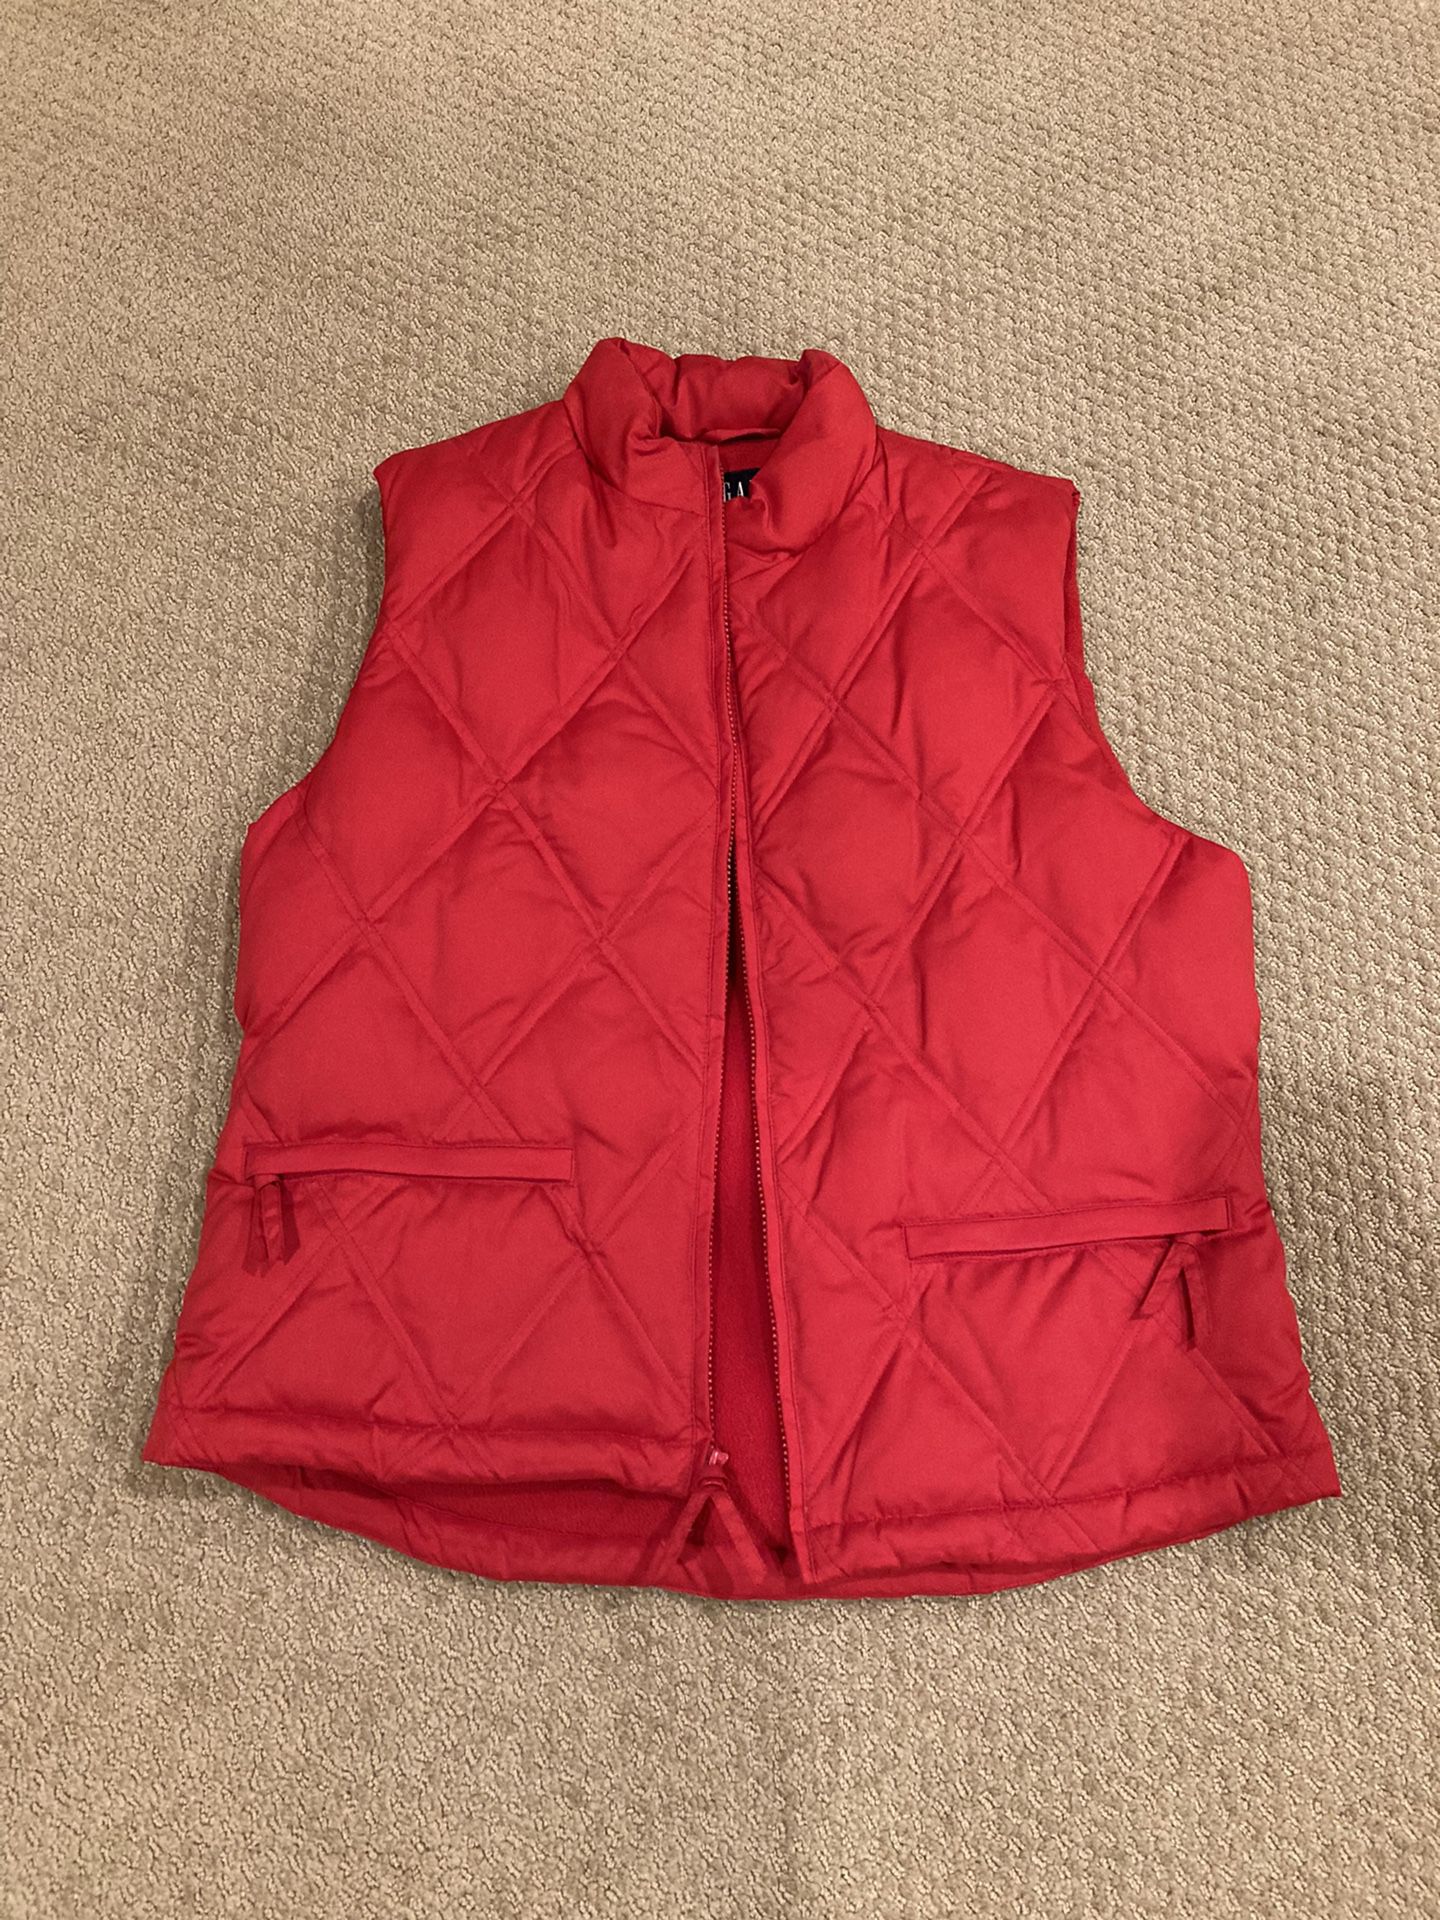 Gap Women’s Puffer Vest